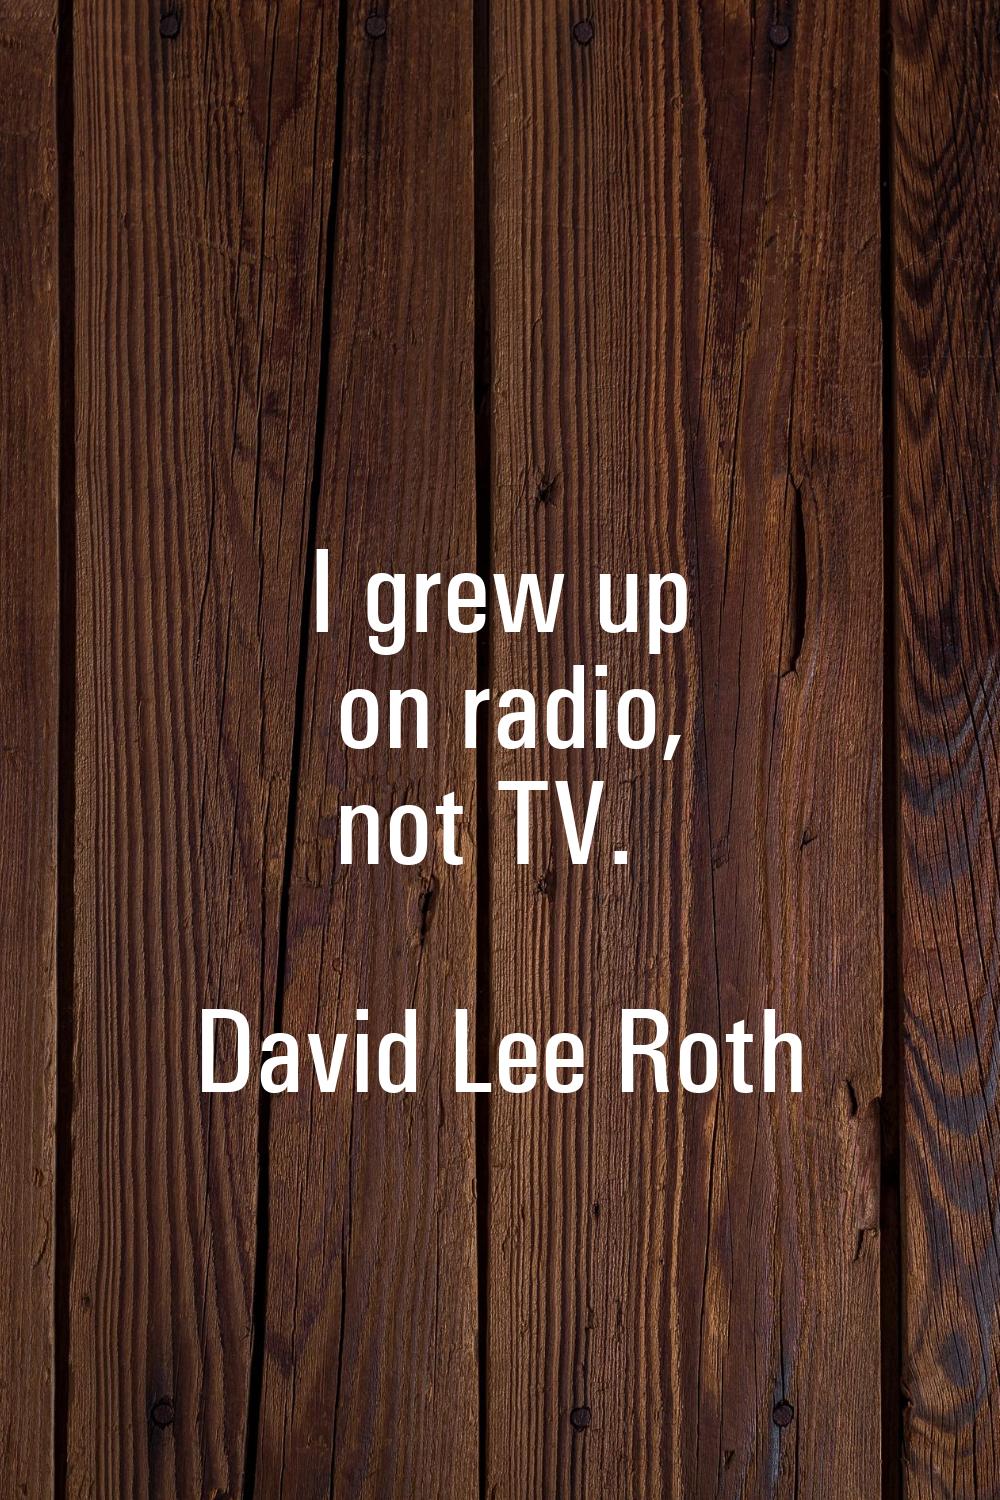 I grew up on radio, not TV.